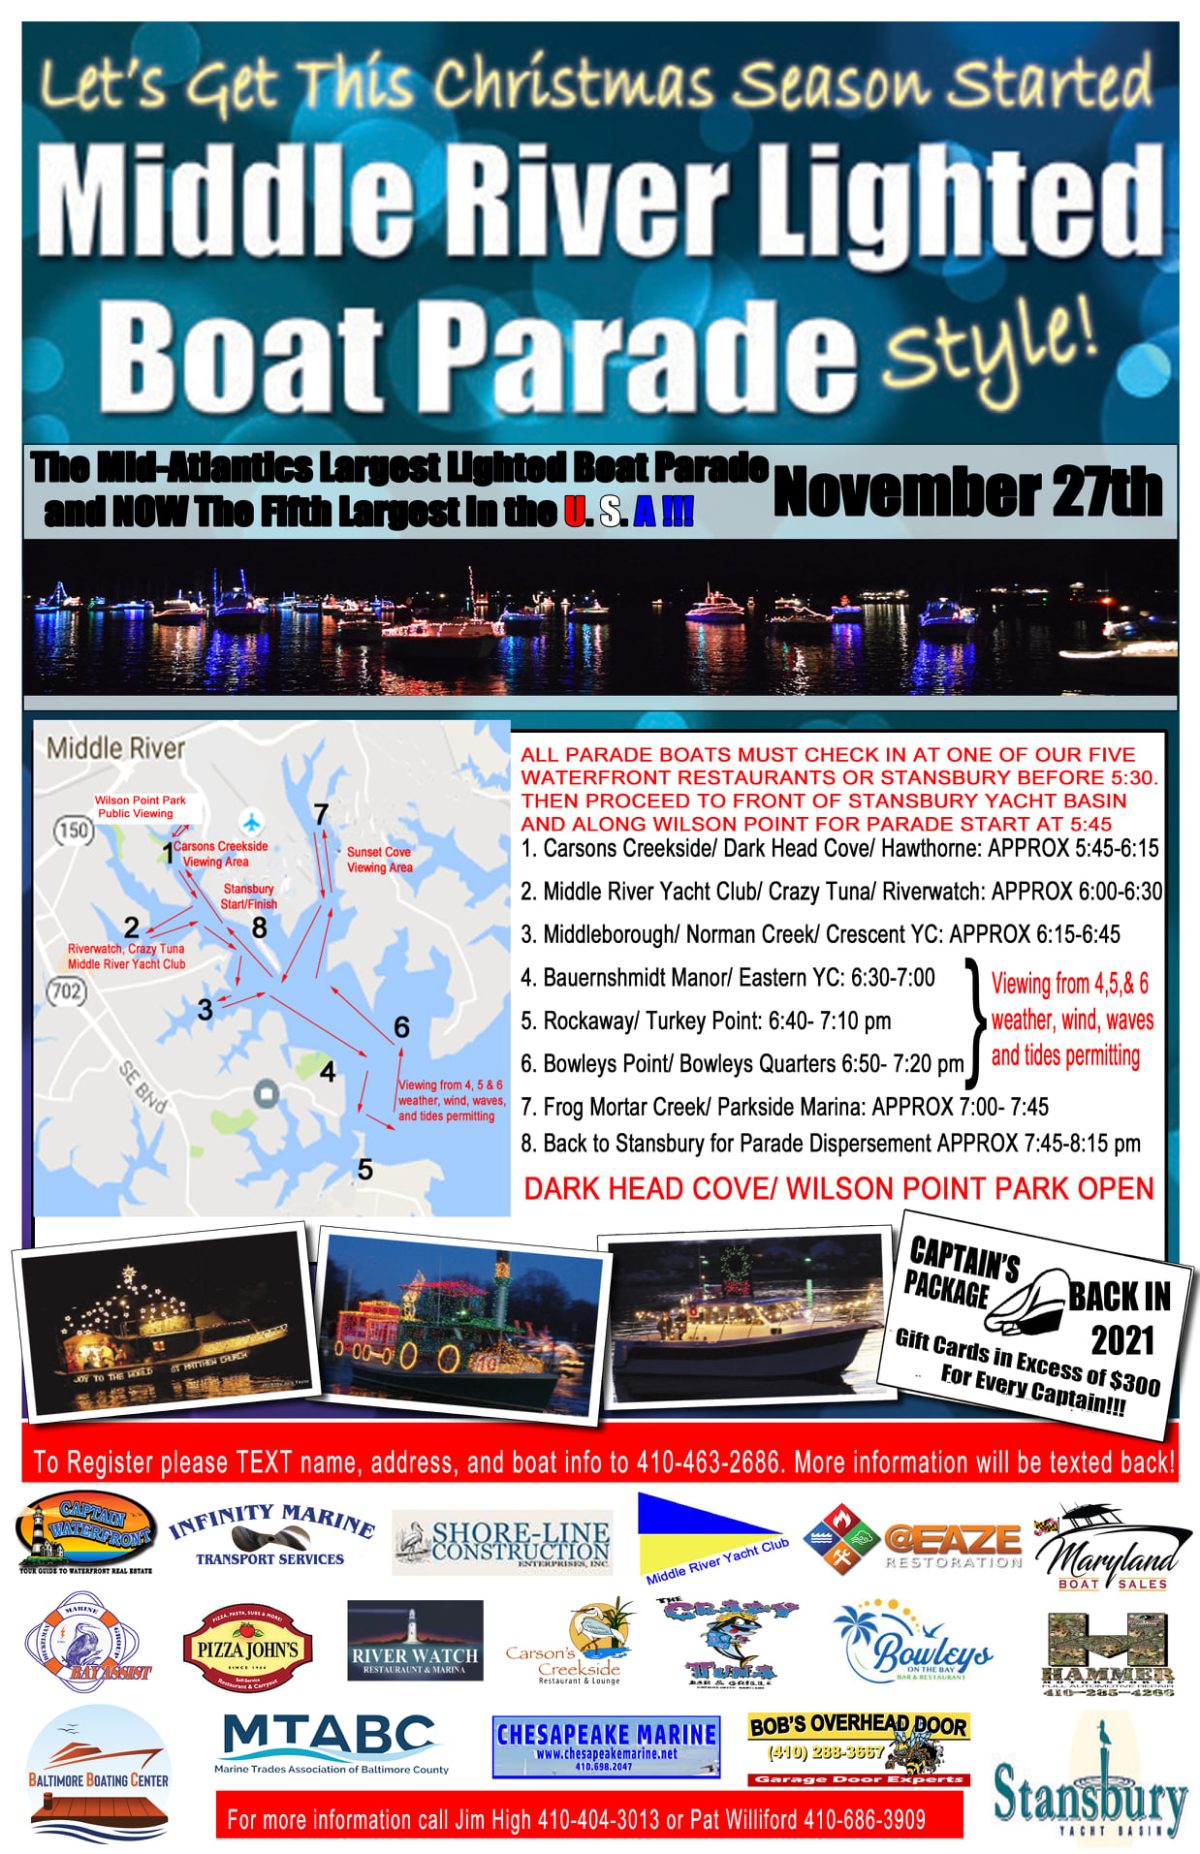 Middle River Boat Parade Kicks Off 2021 Christmas Season